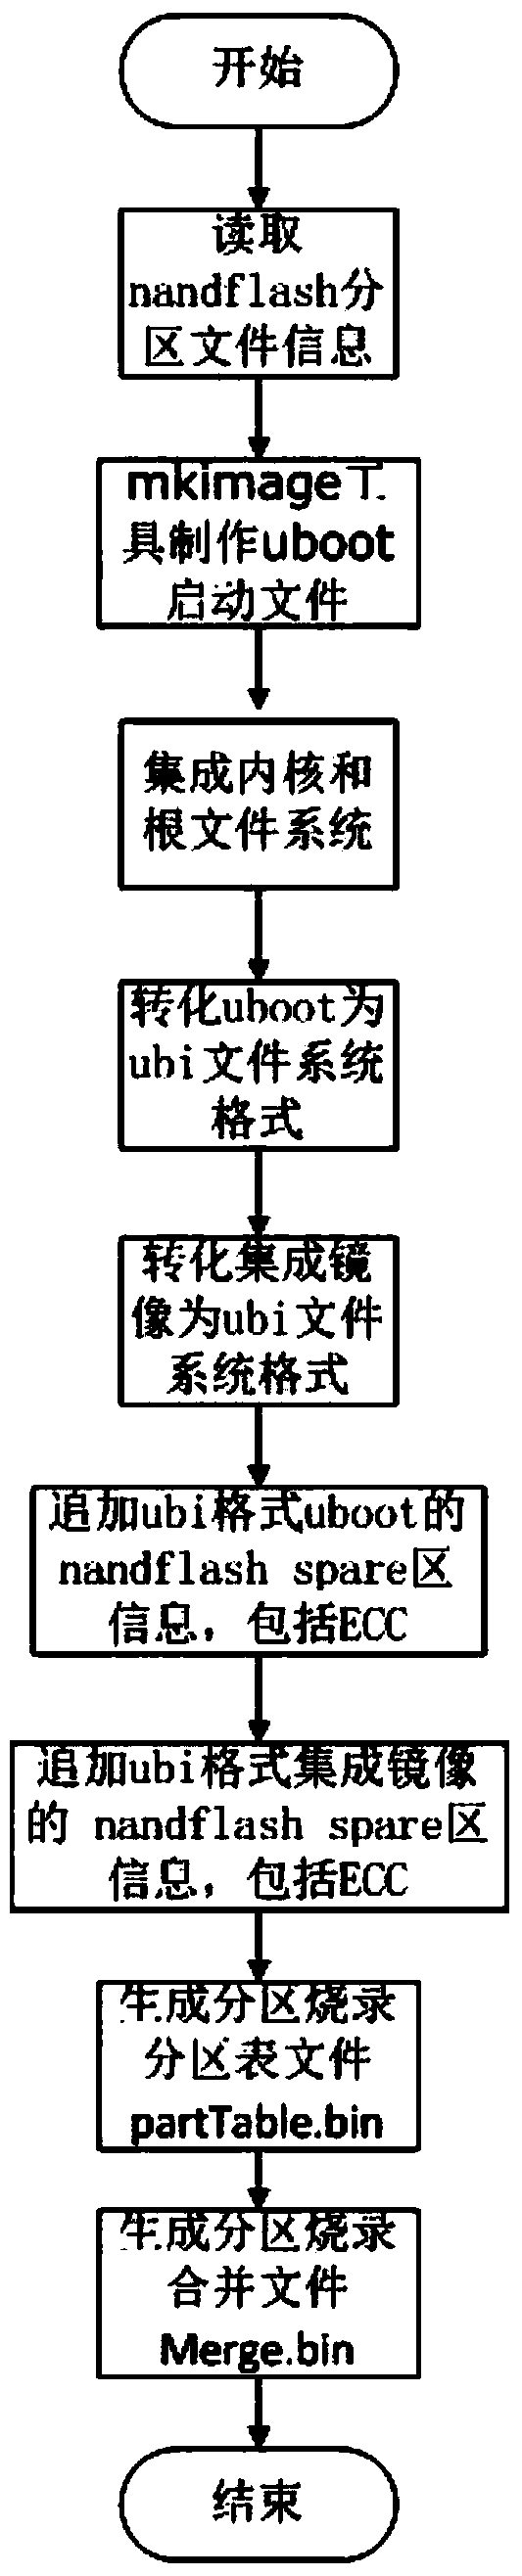 Method for making system files of ubi format into factory burn image files